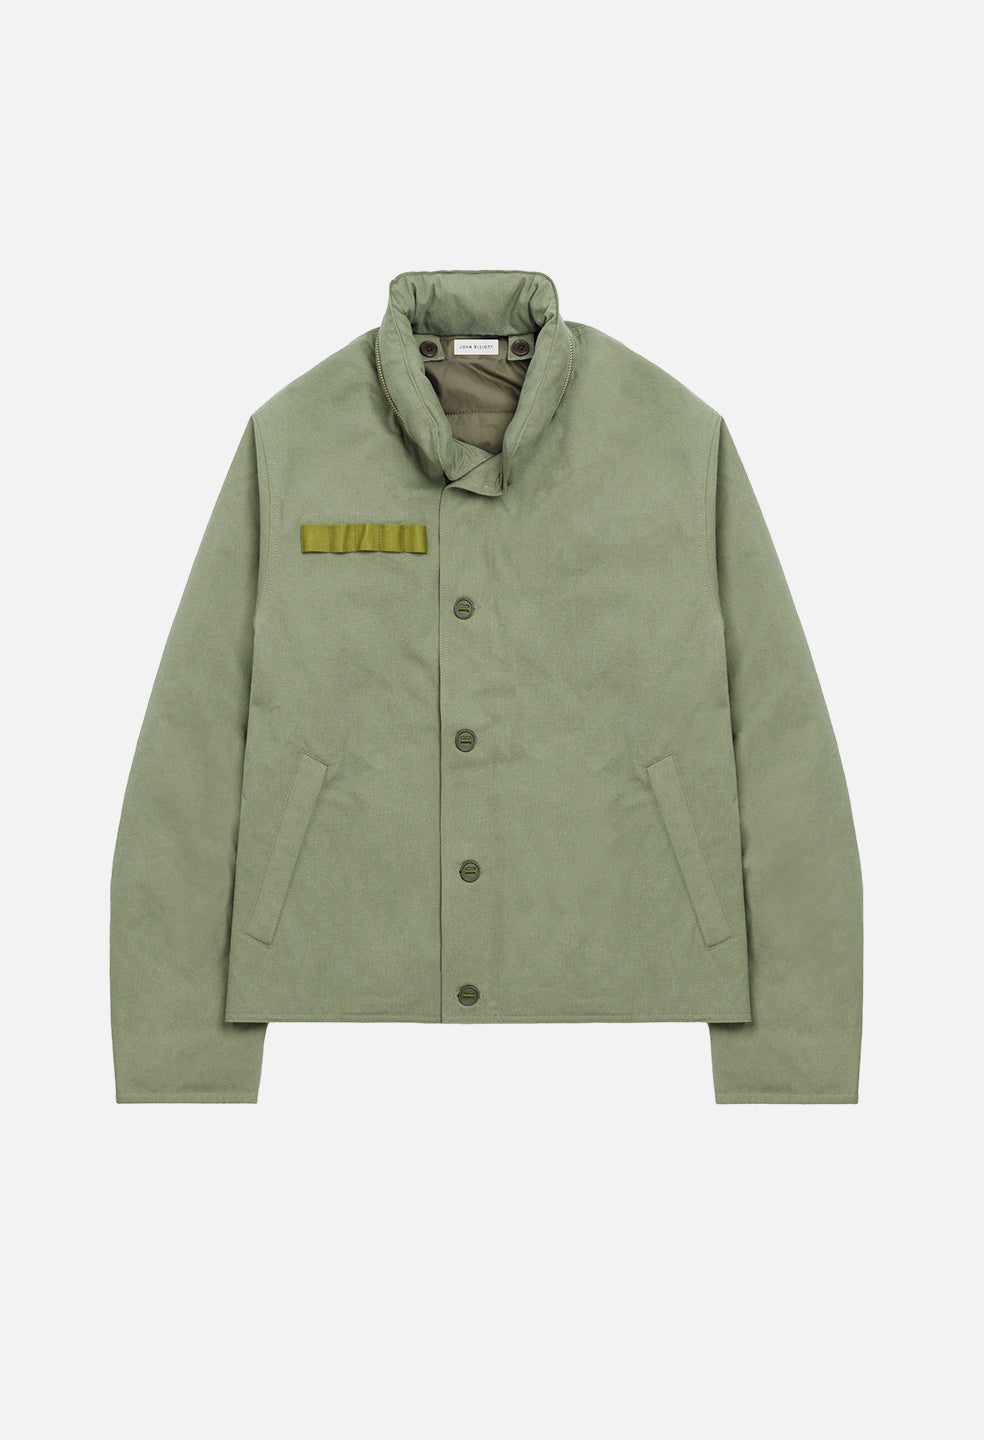 N-1 Deck Jacket / Olive